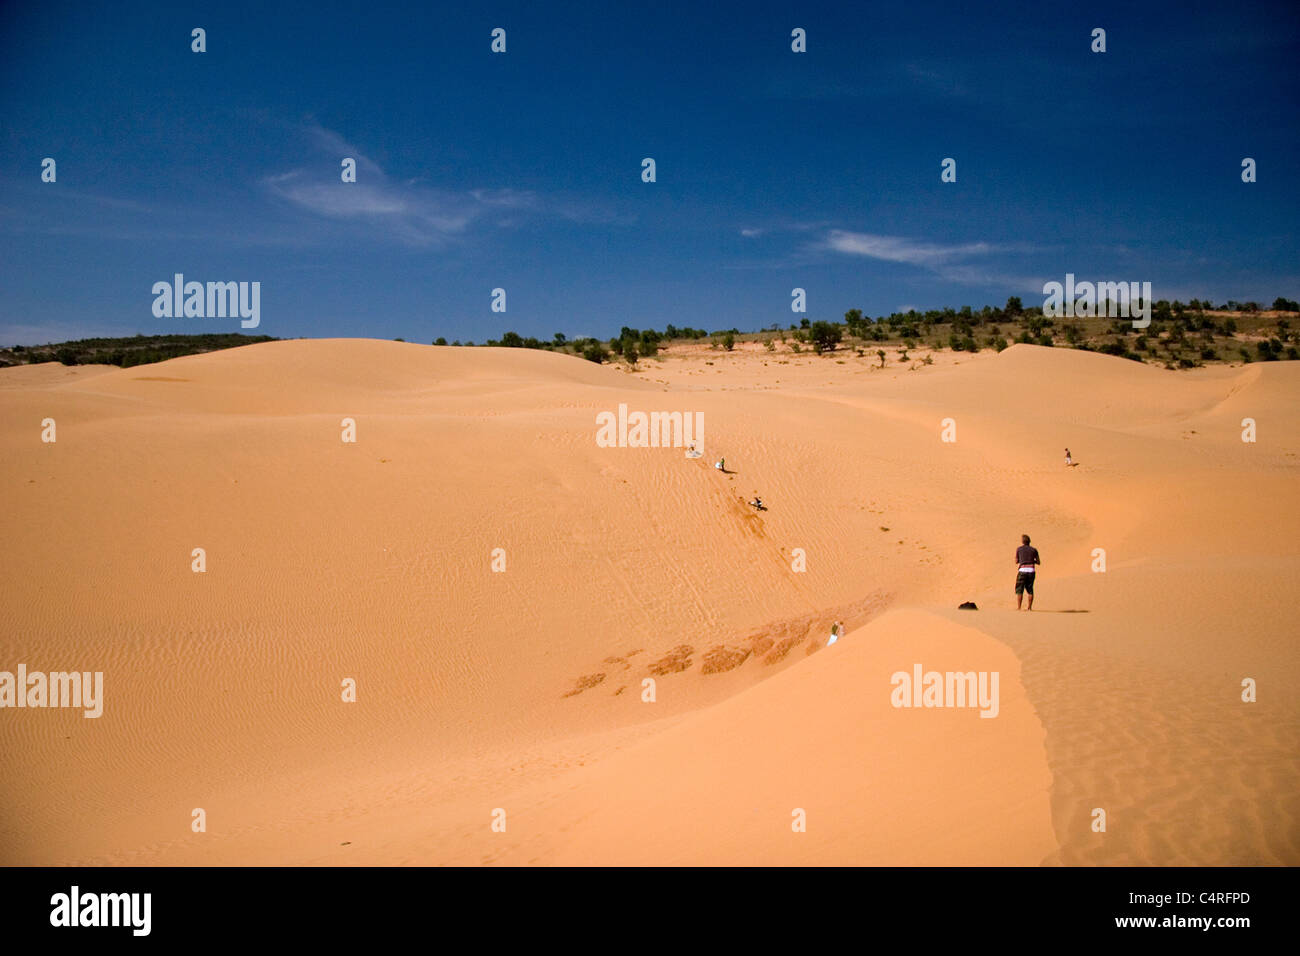 Person in the distance on sandy beach, Mui Ne, Vietnam Stock Photo